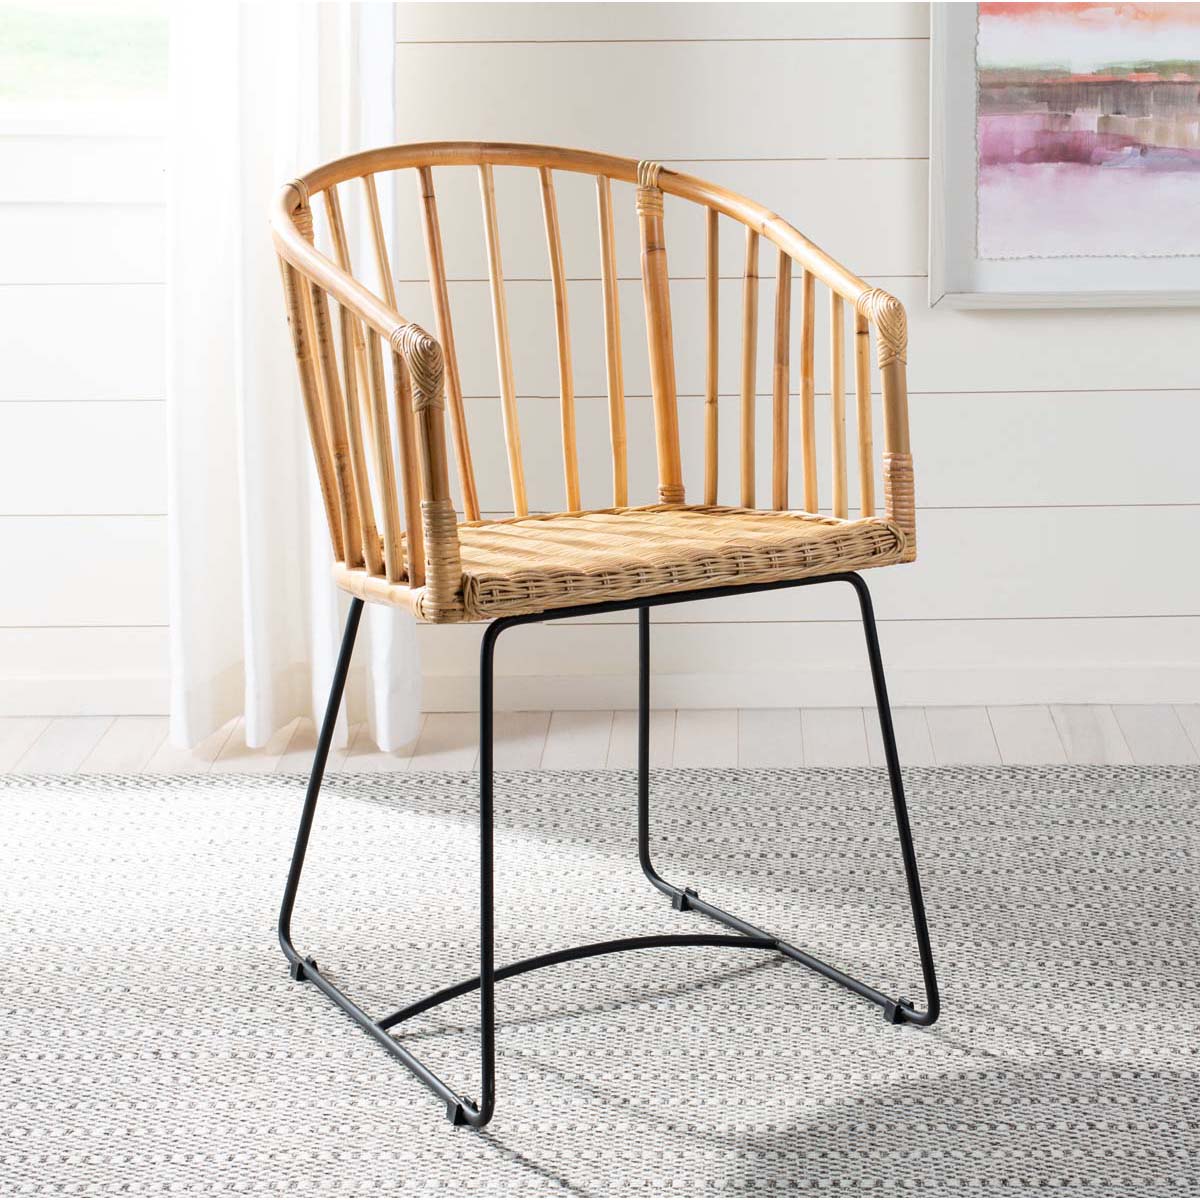 Safavieh Siena Rattan Barrel Dining Chair , DCH6501 - Natural/Black